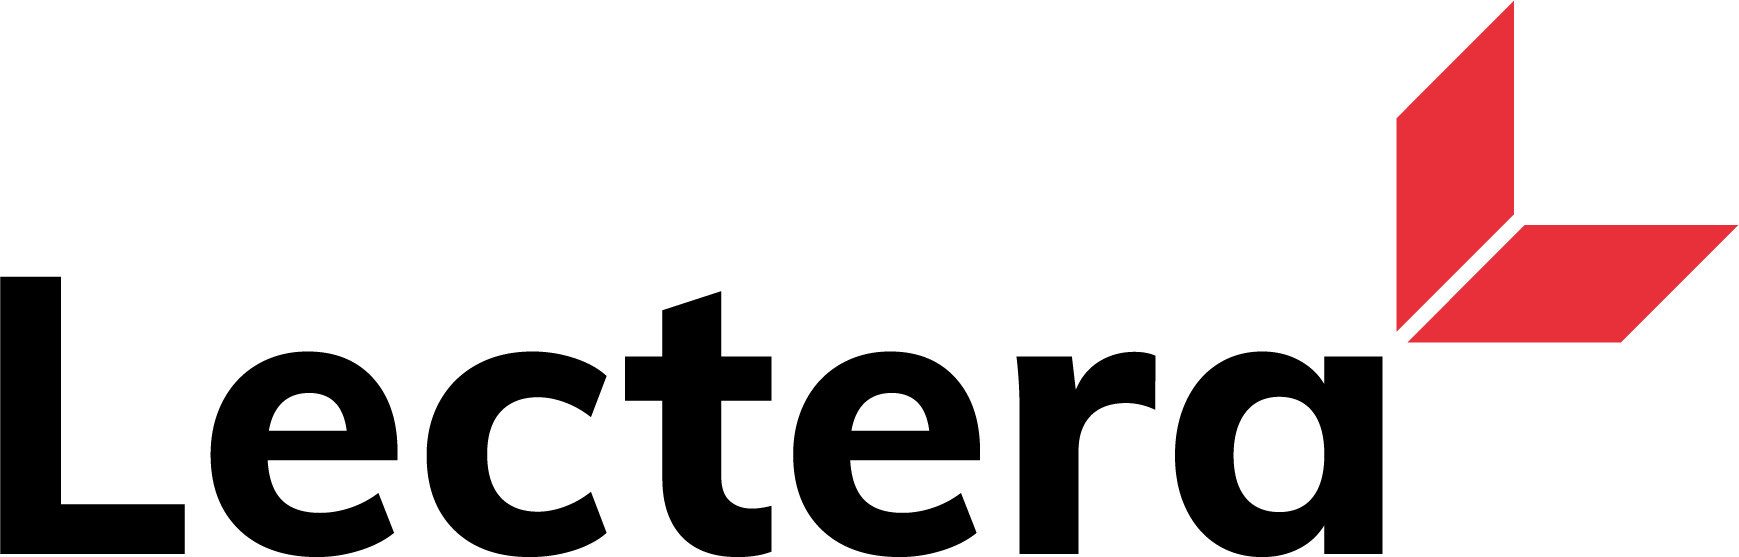 Логотип компании Lectera